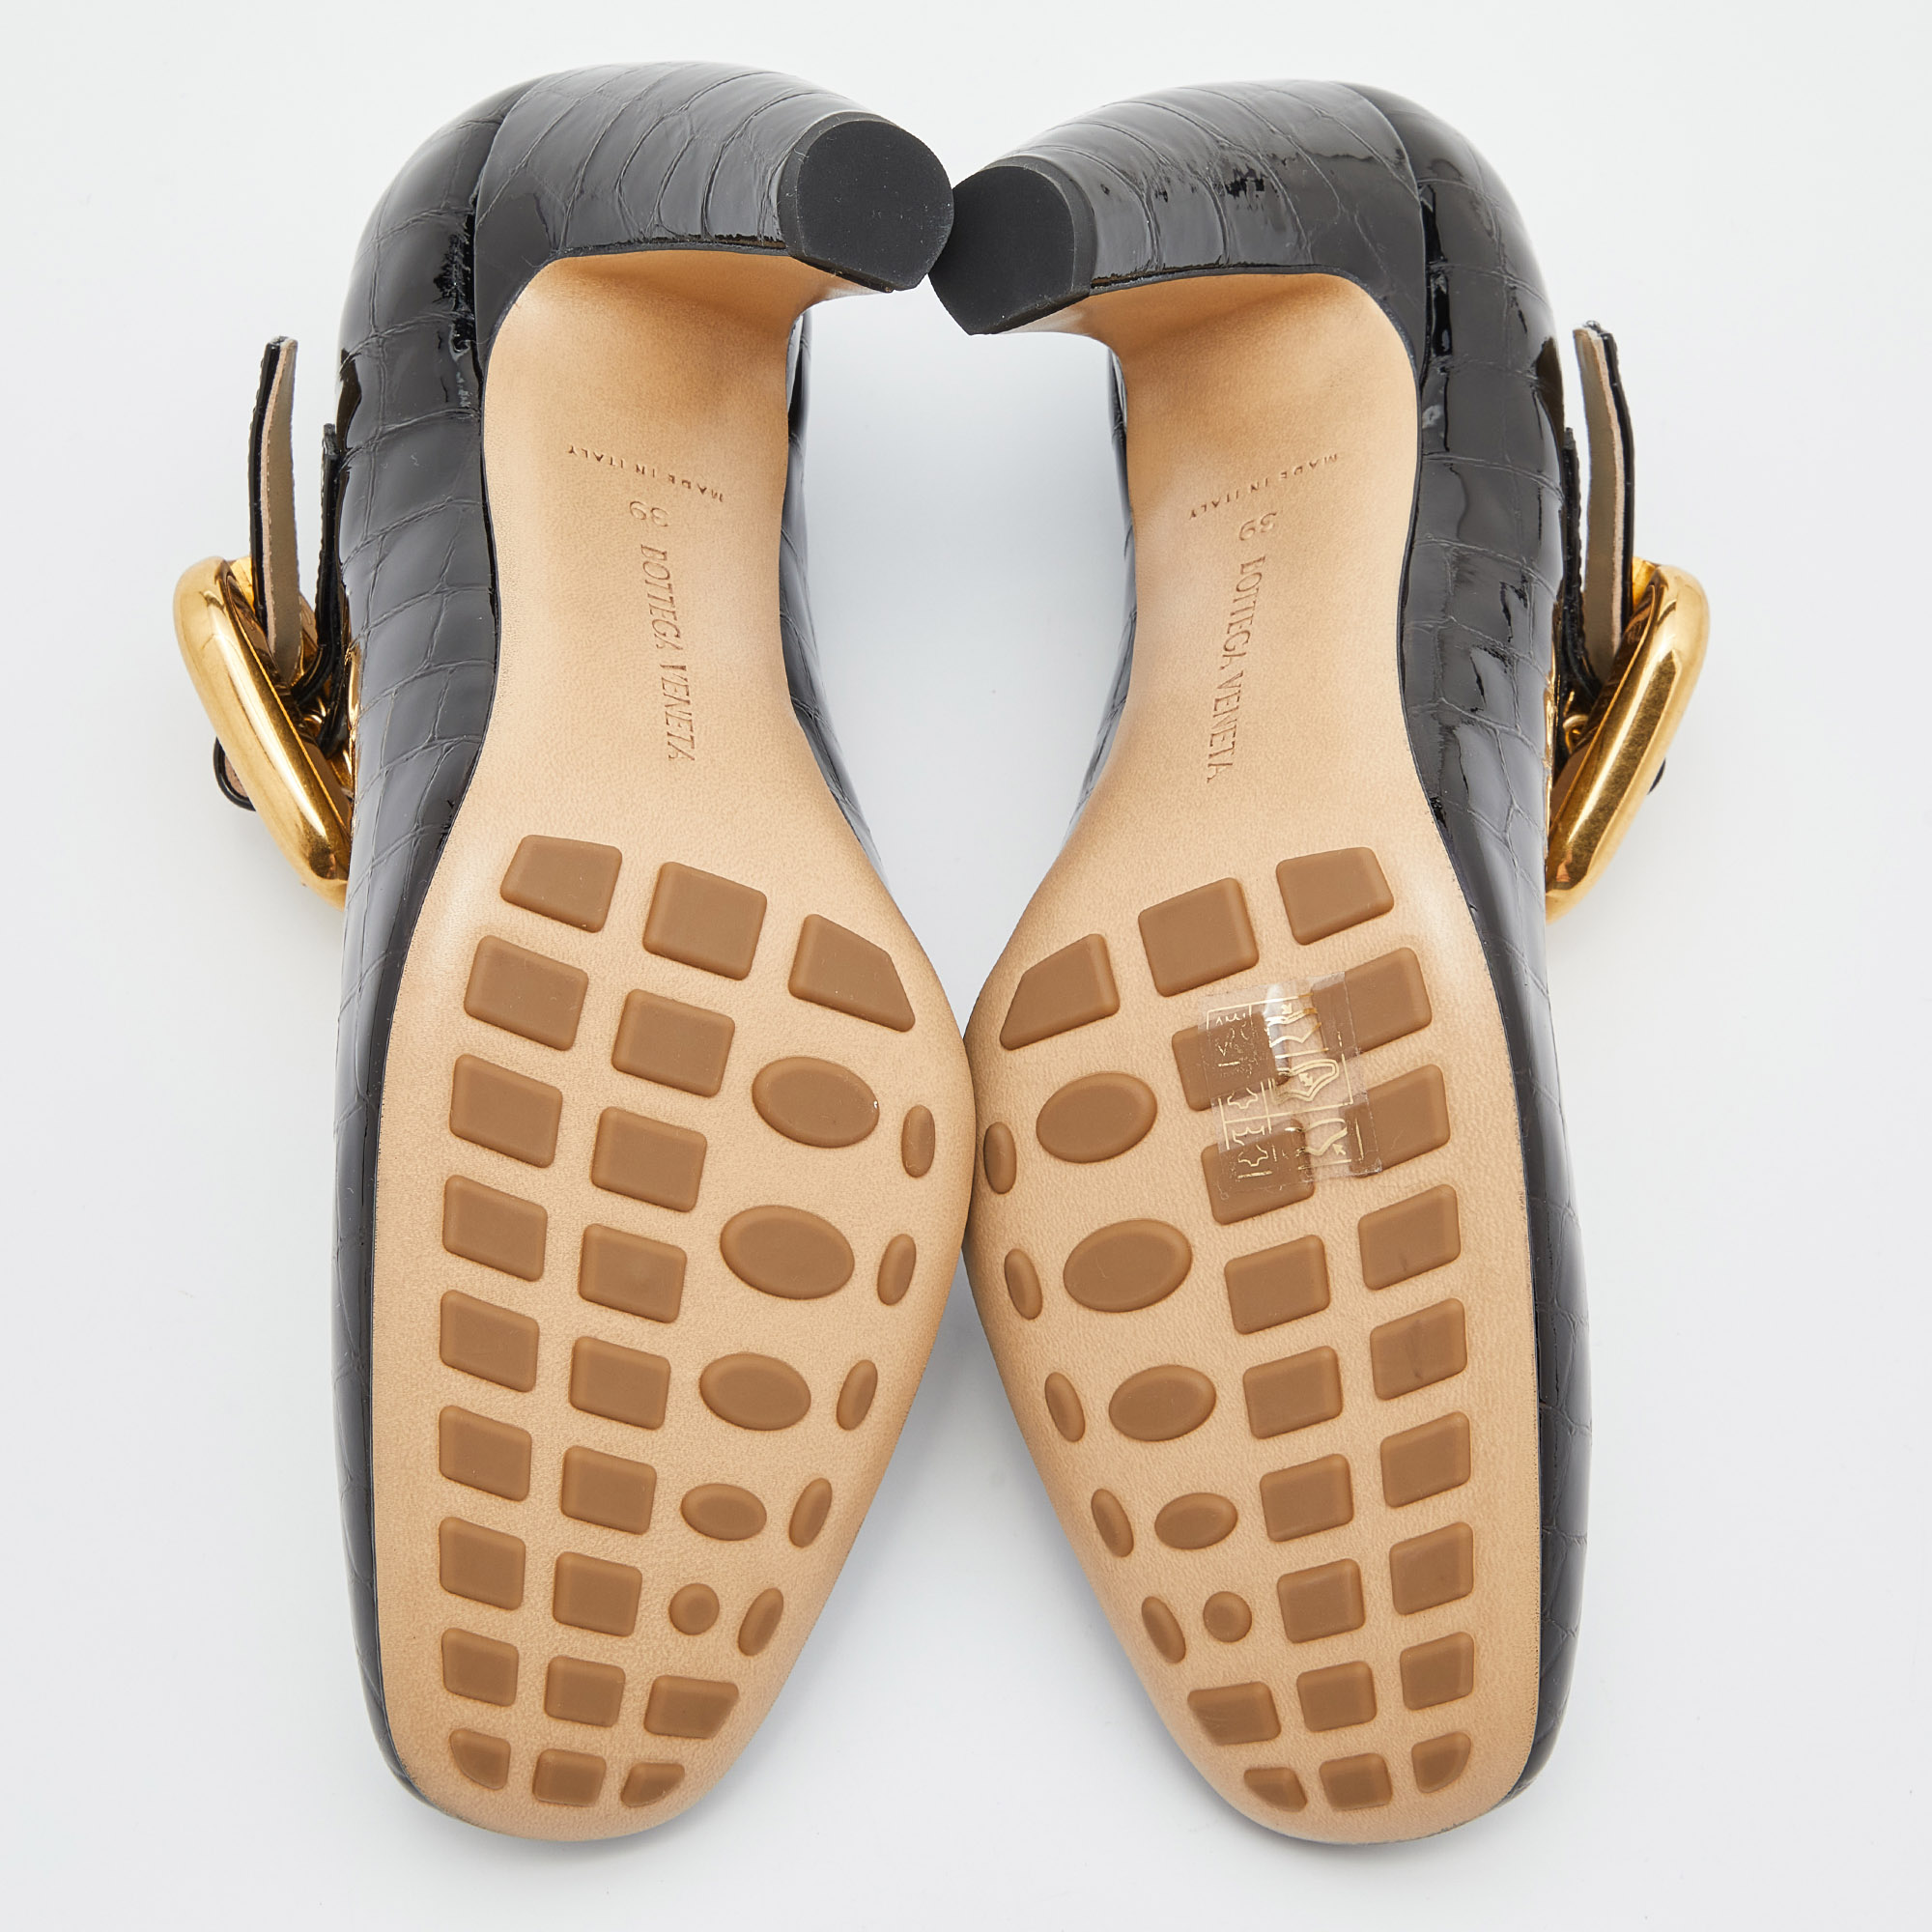 Bottega Veneta Black Croc Embossed Patent Leather Block Heel Pumps Size 39